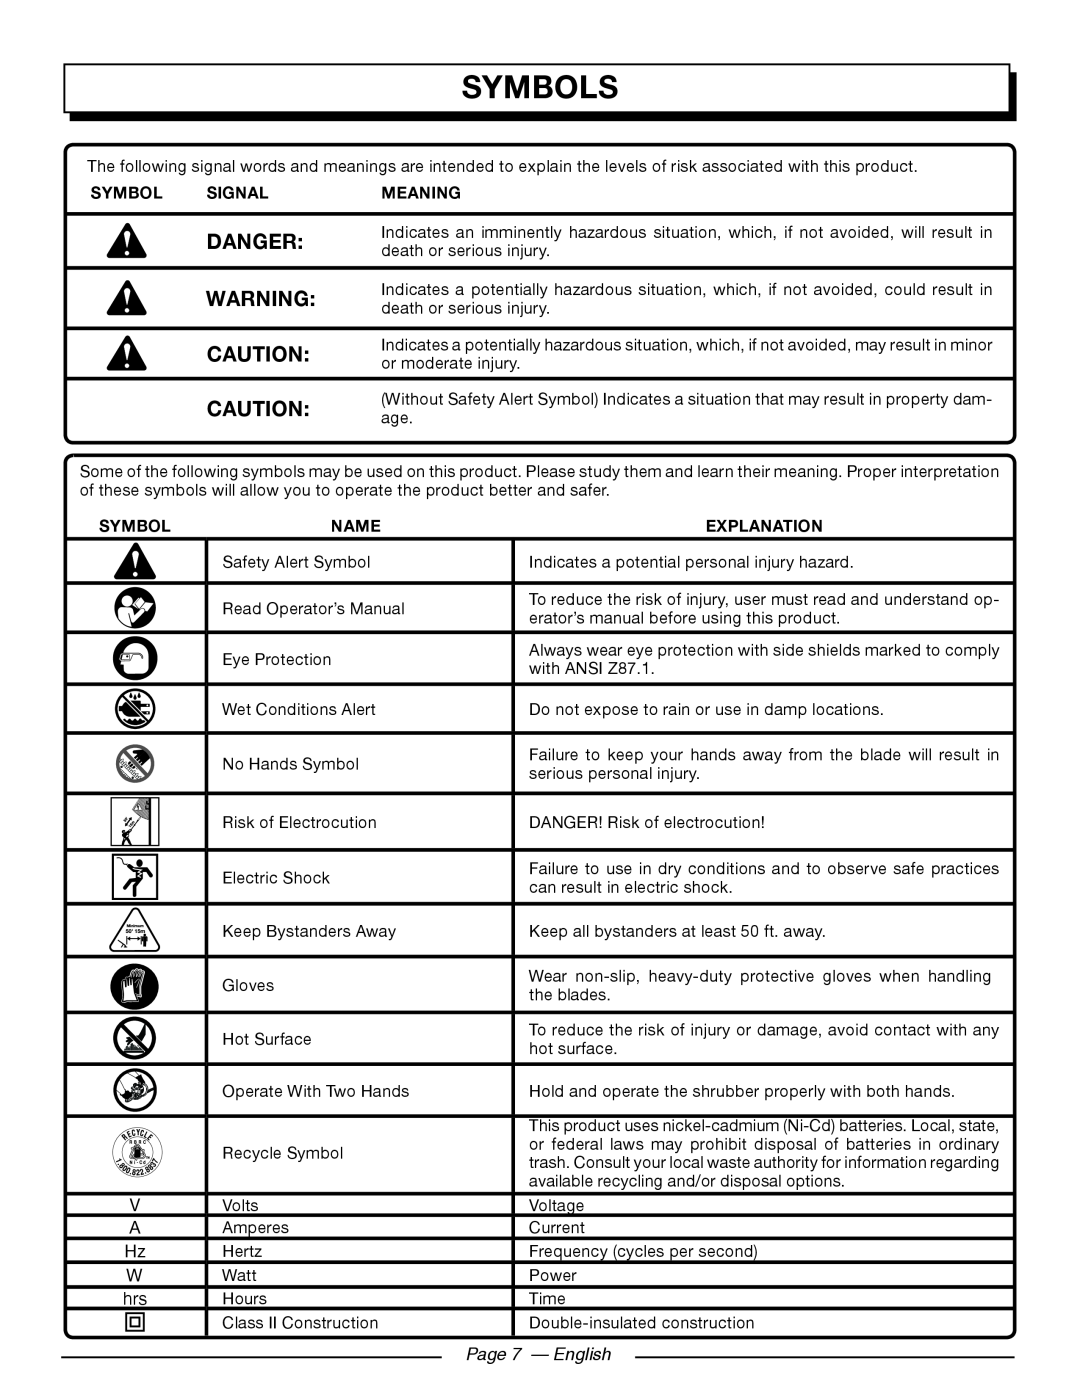 Homelite UT44171 manuel dutilisation Symbols, Danger, Signal, Meaning, Name, Explanation, Page 7 - English 